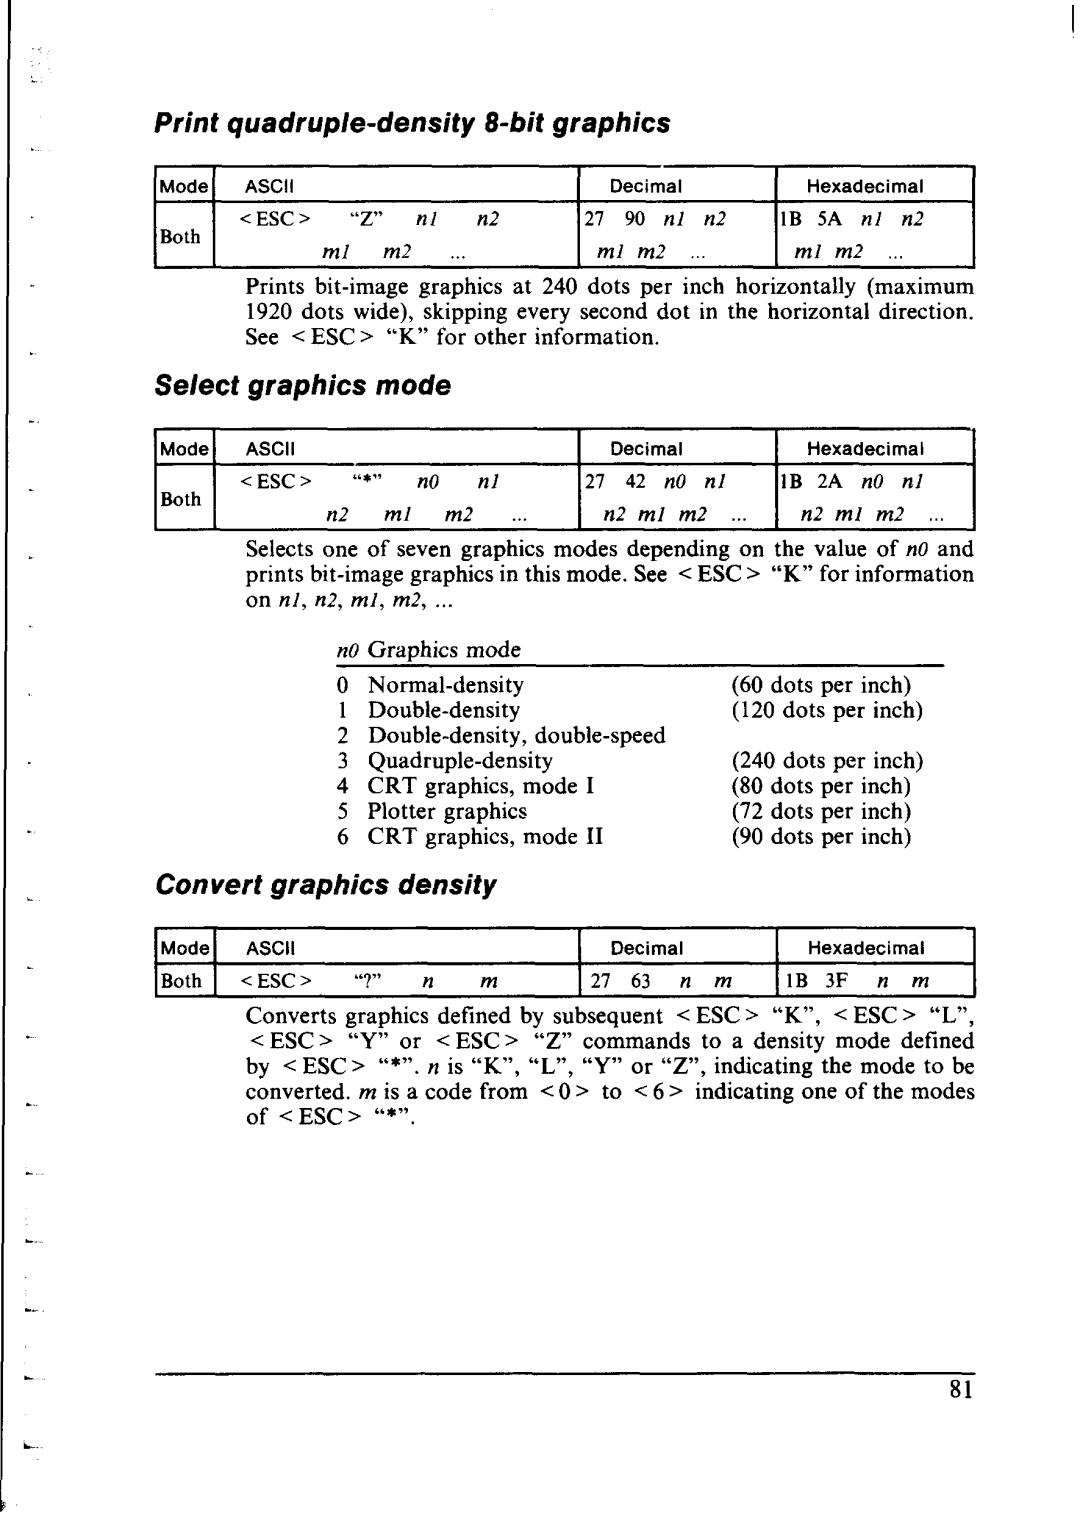 Star Micronics NX-1000 manual Print quadruple-density b-bit graphics, Select graphics mode, Convert graphics 